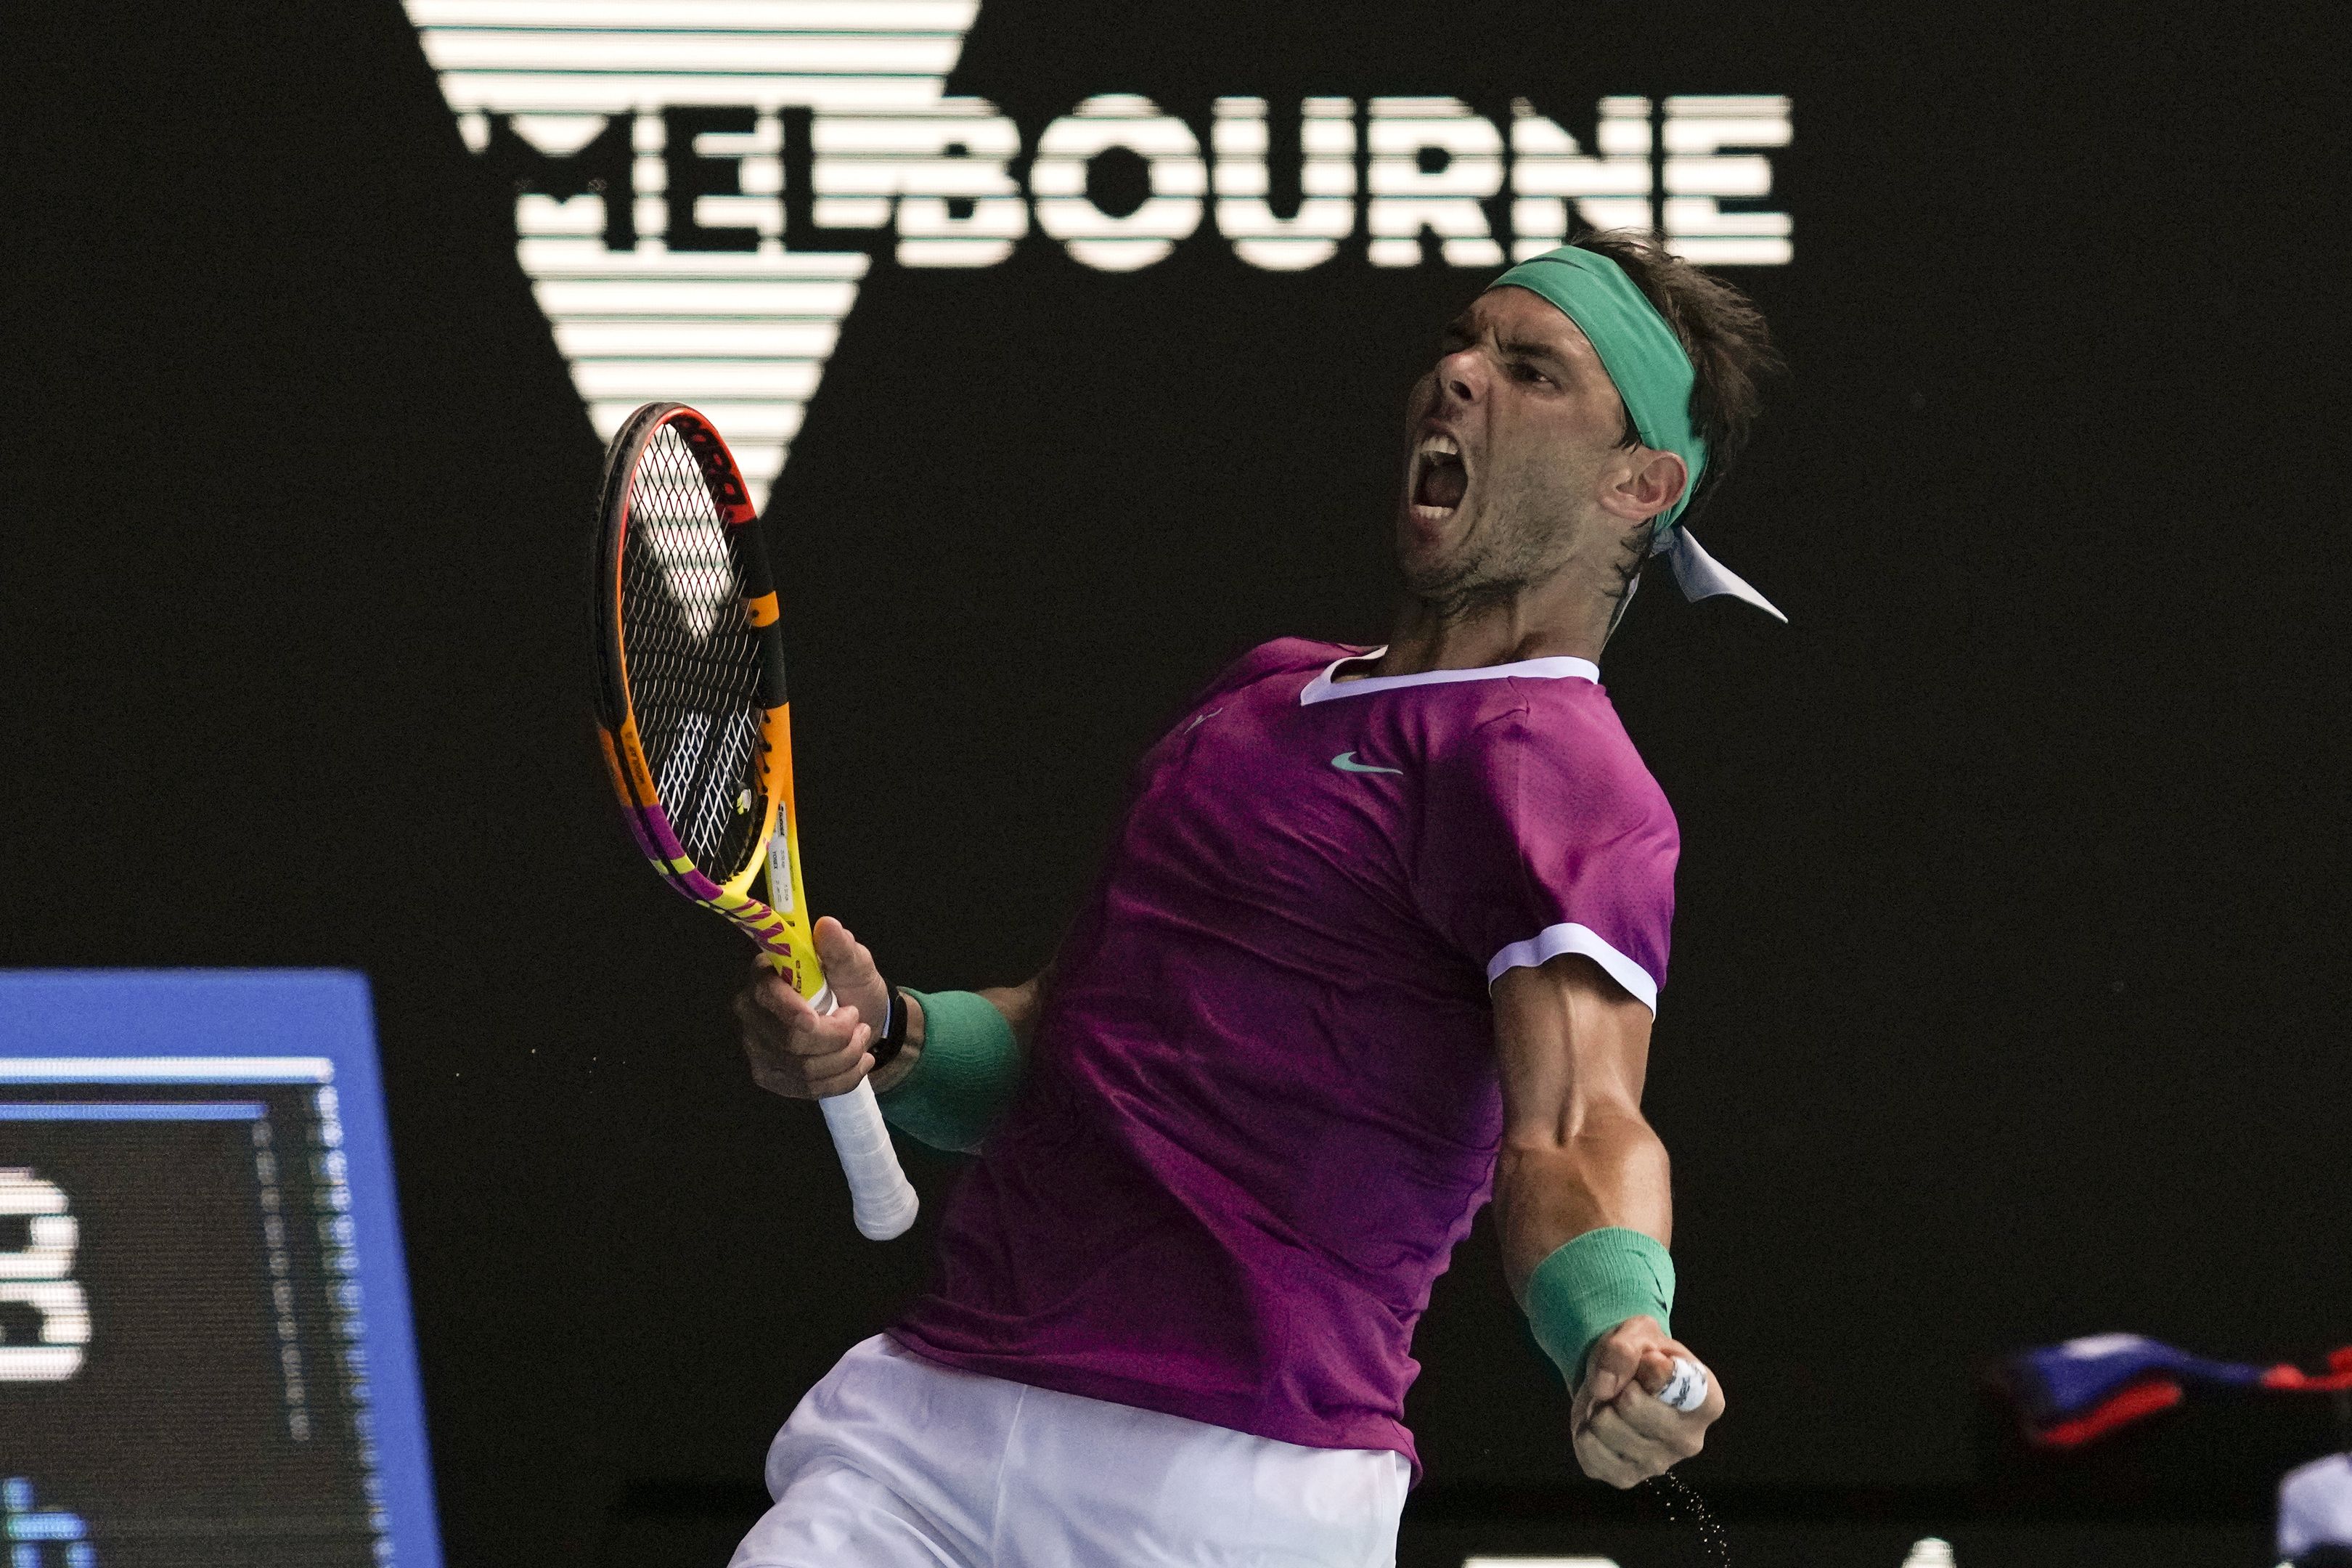 Rafael Nadal overcomes 'emotional' first set to win way into Australian Open quarter finals